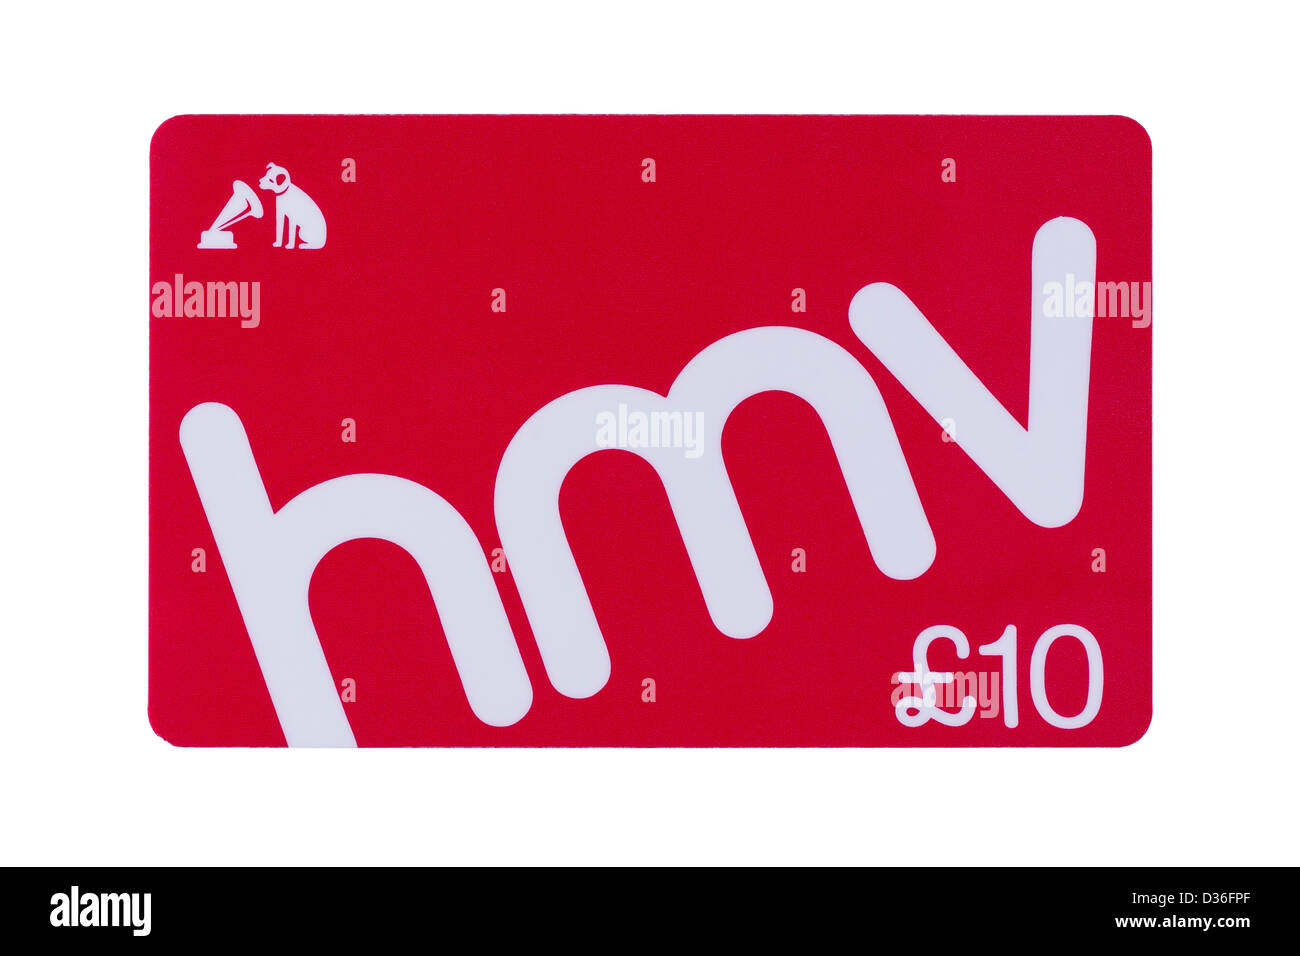 A £10 value hmv gift voucher on a white background Stock Photo